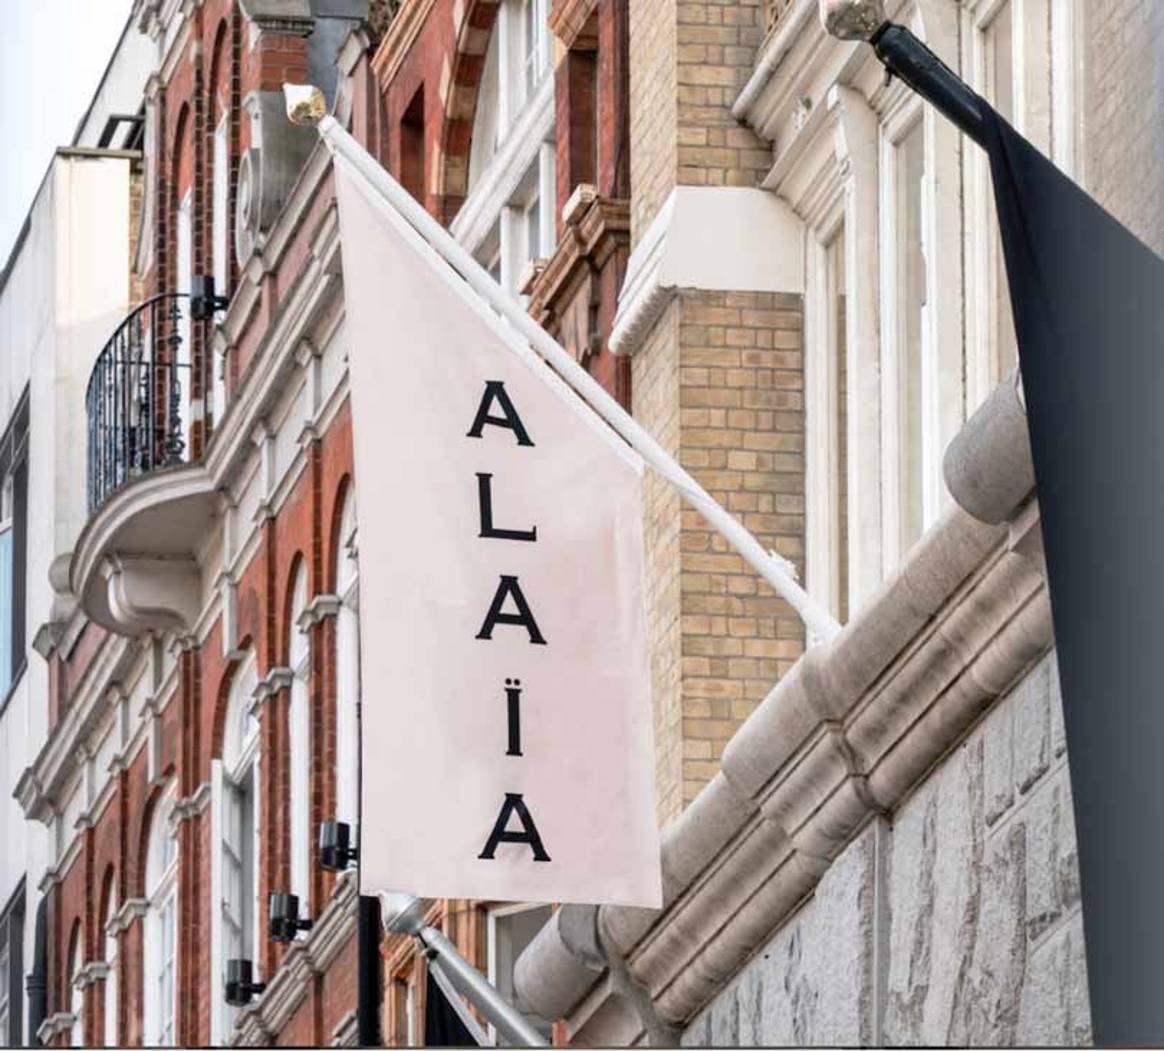 Alaia eröffnet Flagshipstore in London